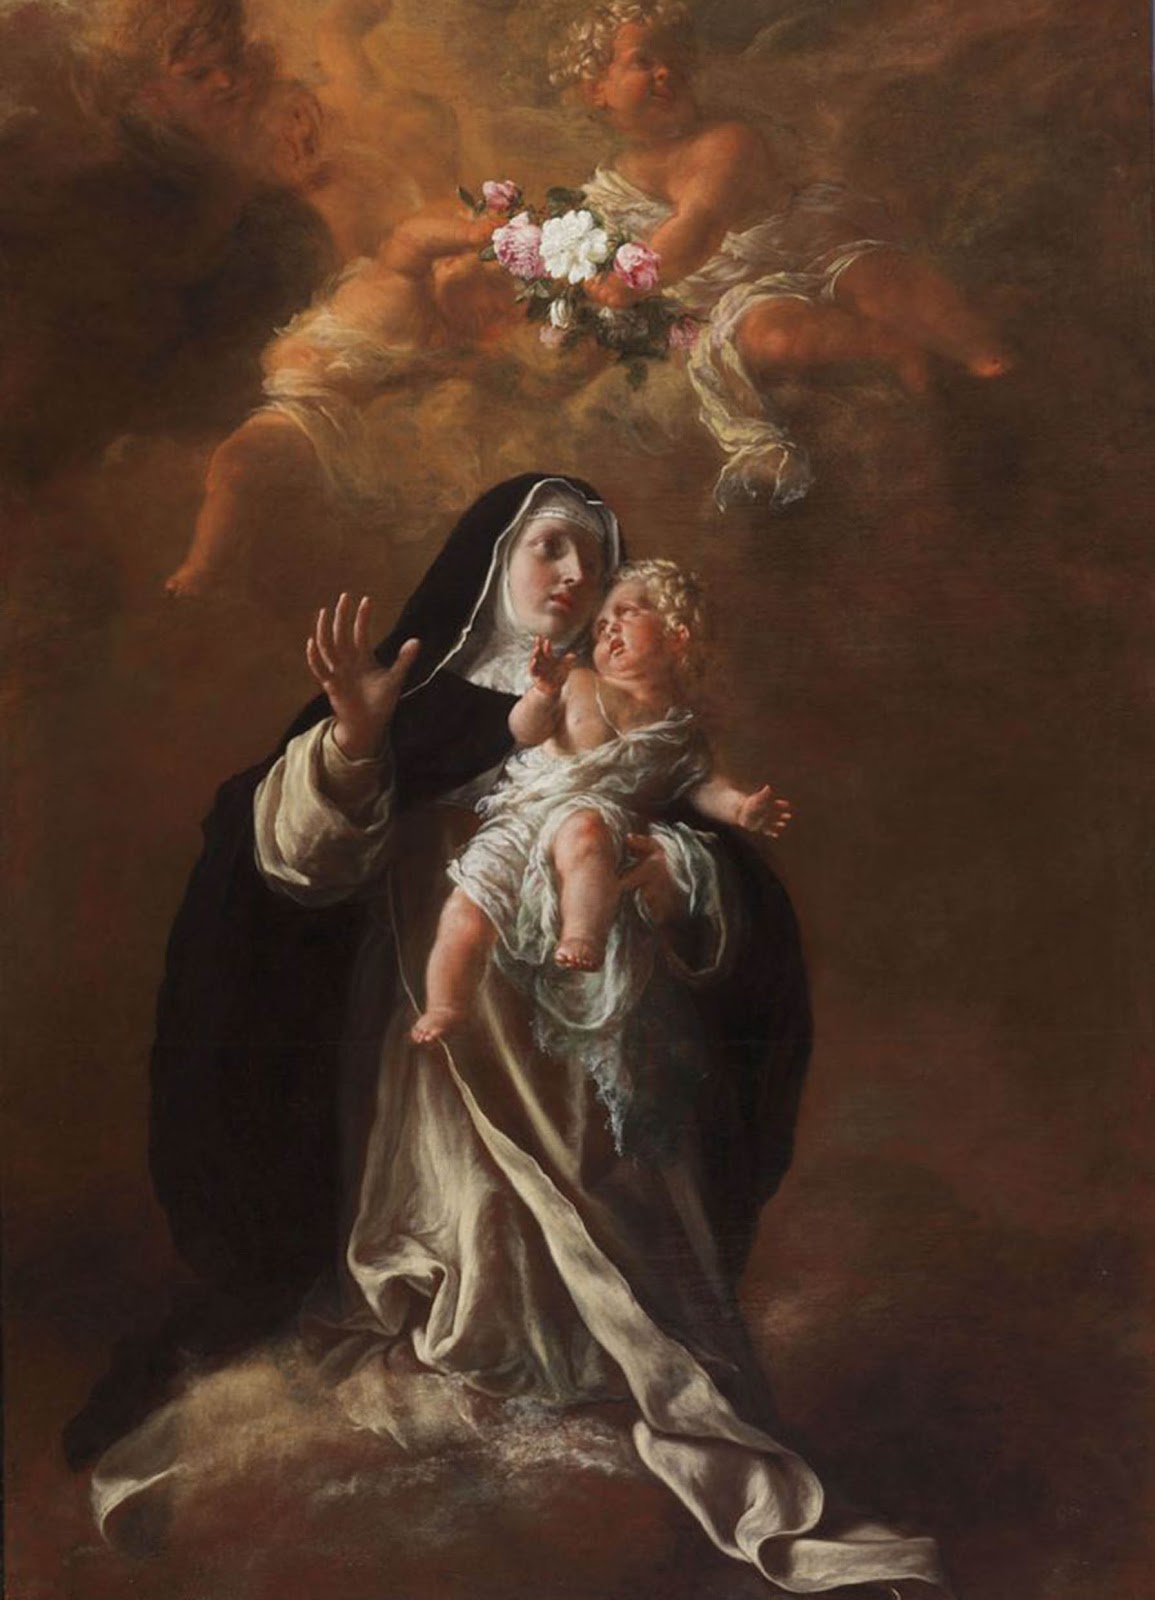 23 agosto, santa Rosa da Lima